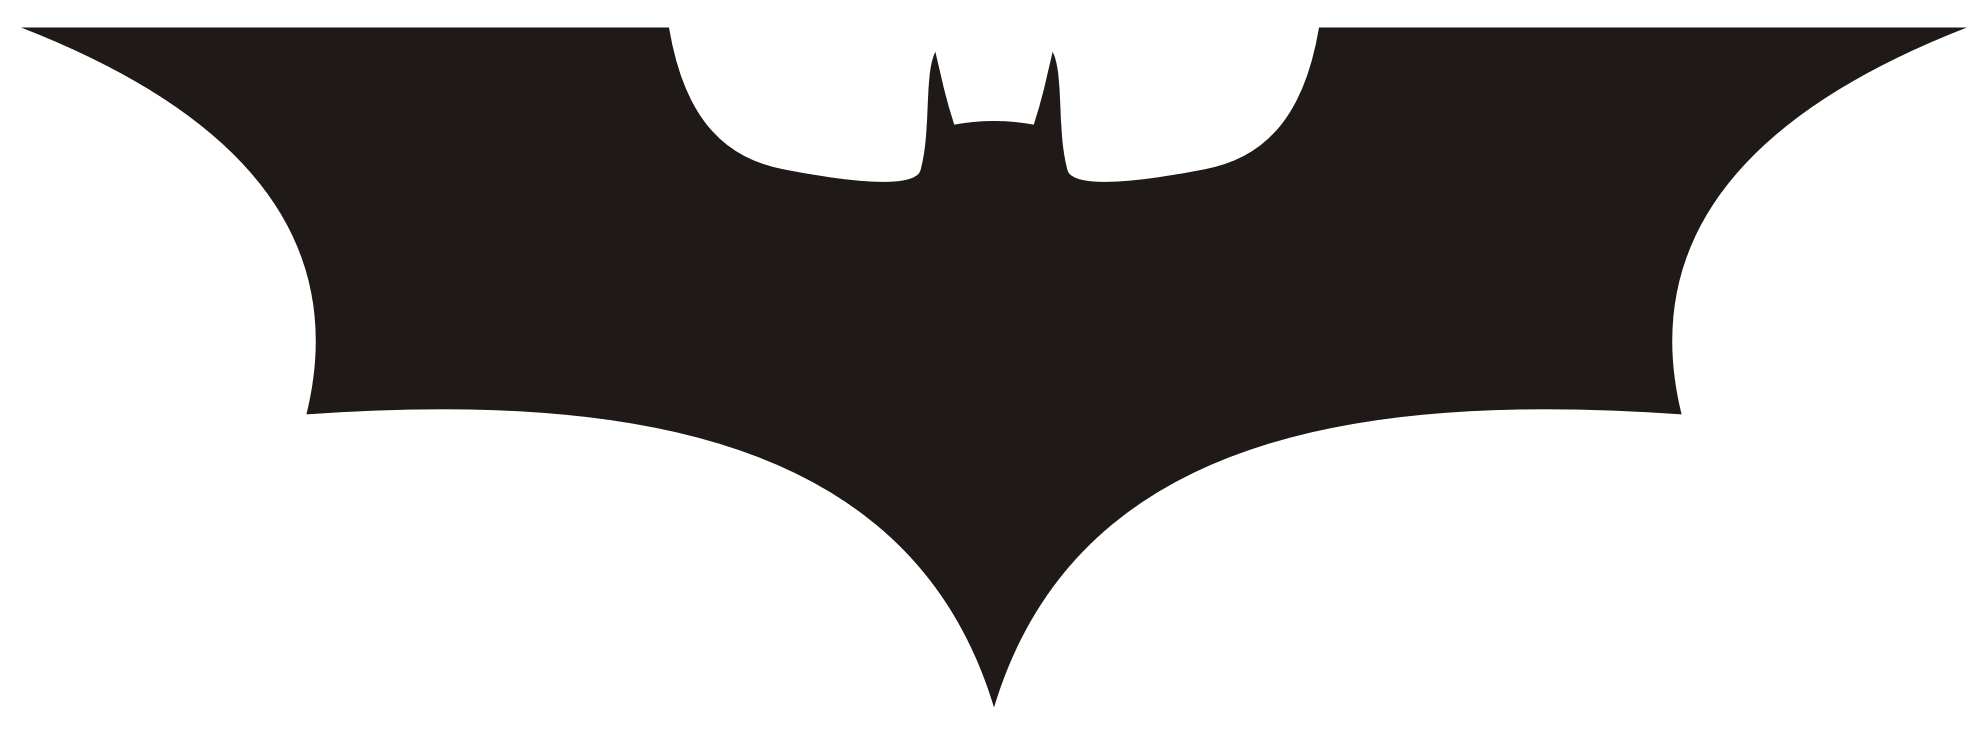 Bat logo | Inspirations for Gothams Softball logo | Pinterest